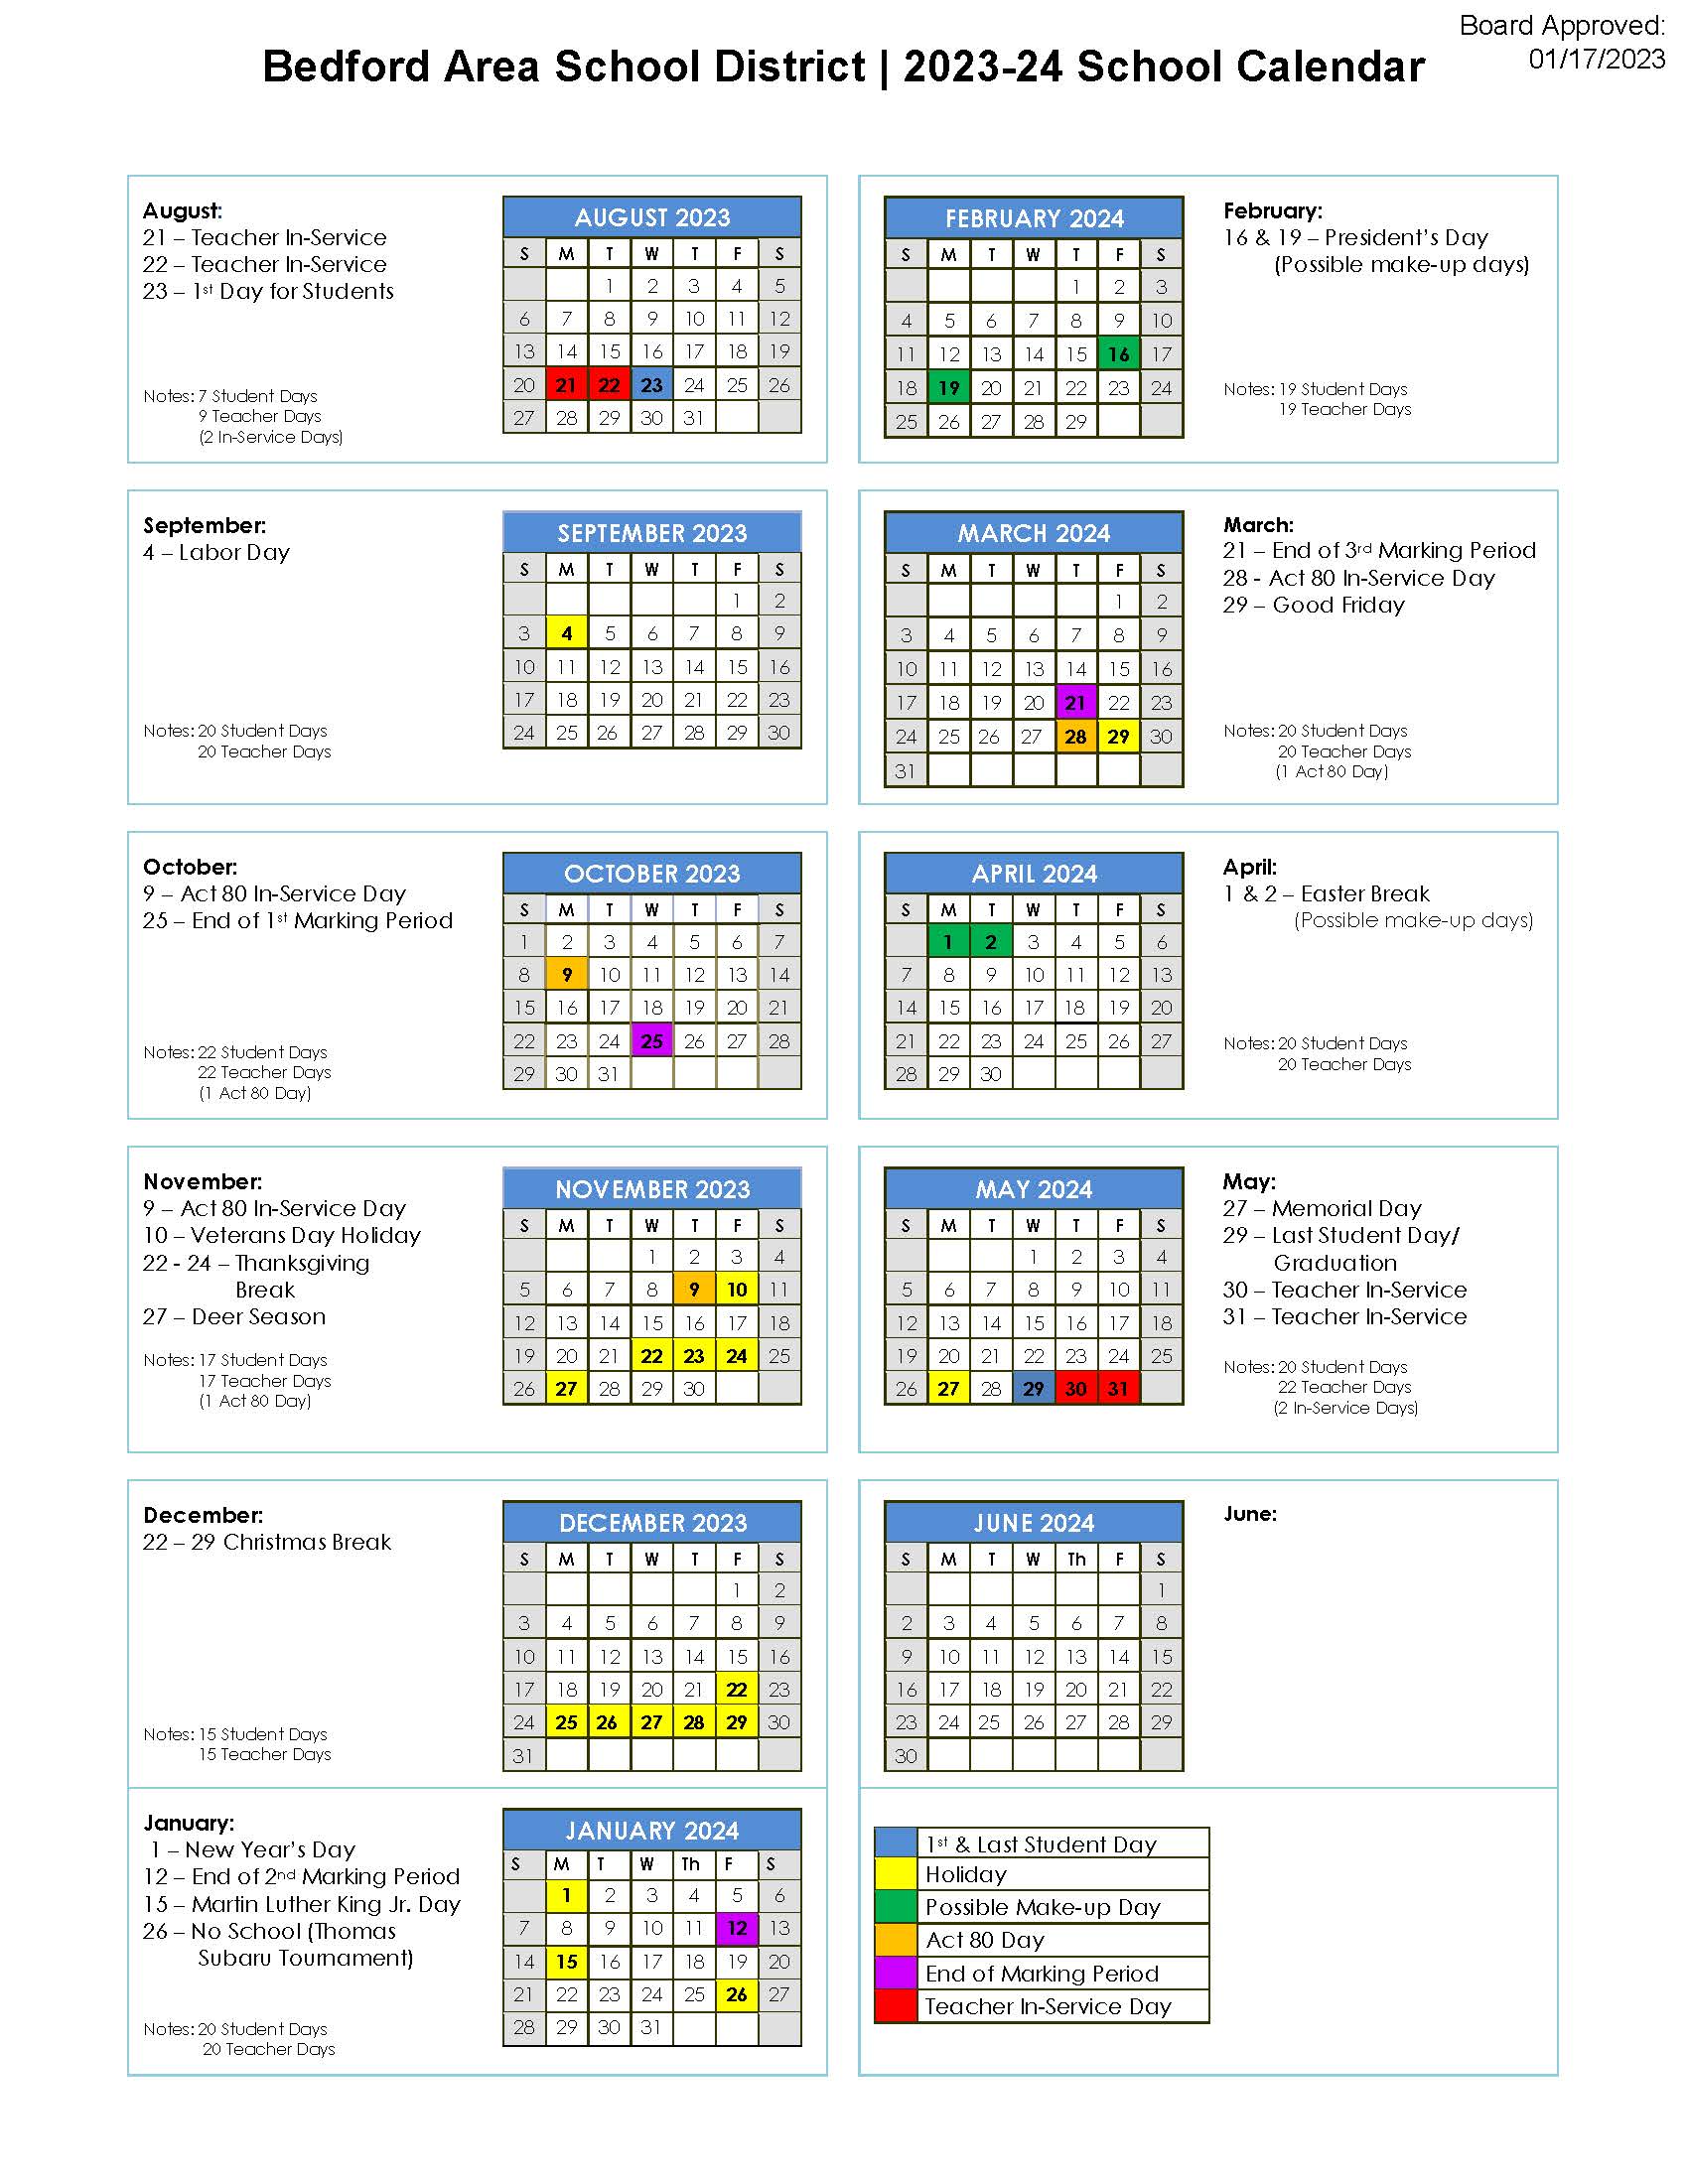 Bedford Nh School Calendar 2025 alanna cathrin